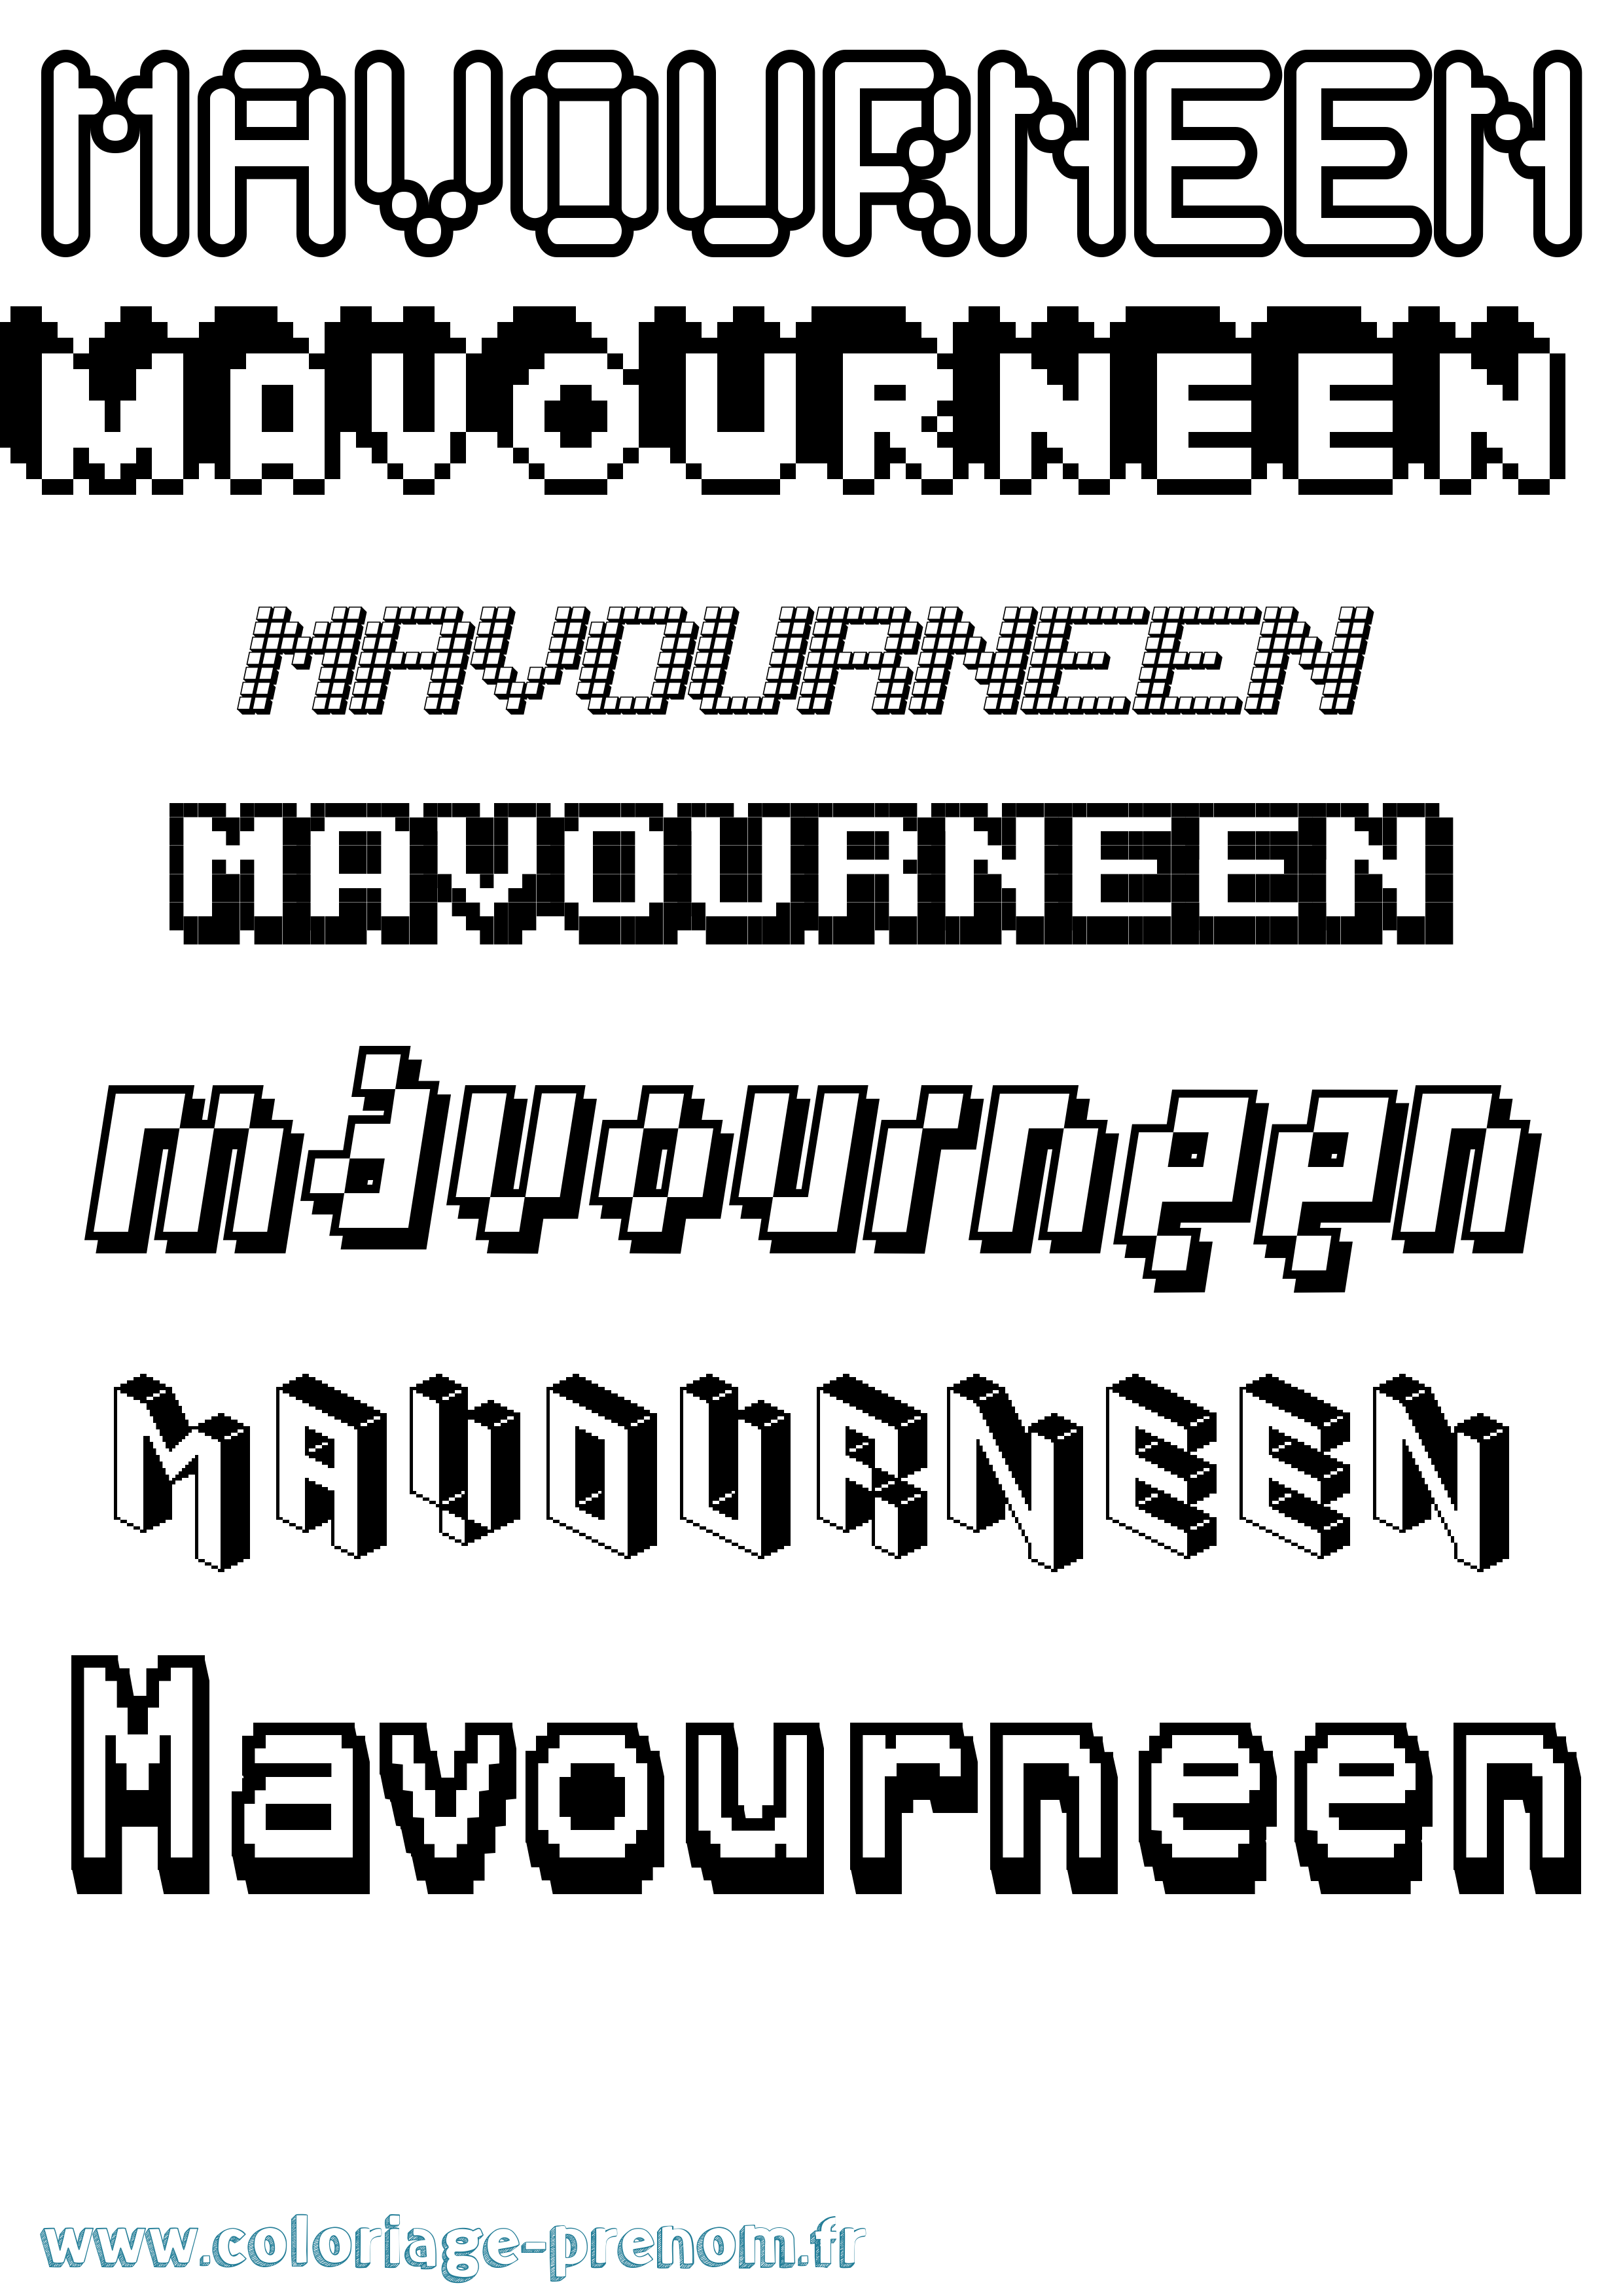 Coloriage prénom Mavourneen Pixel